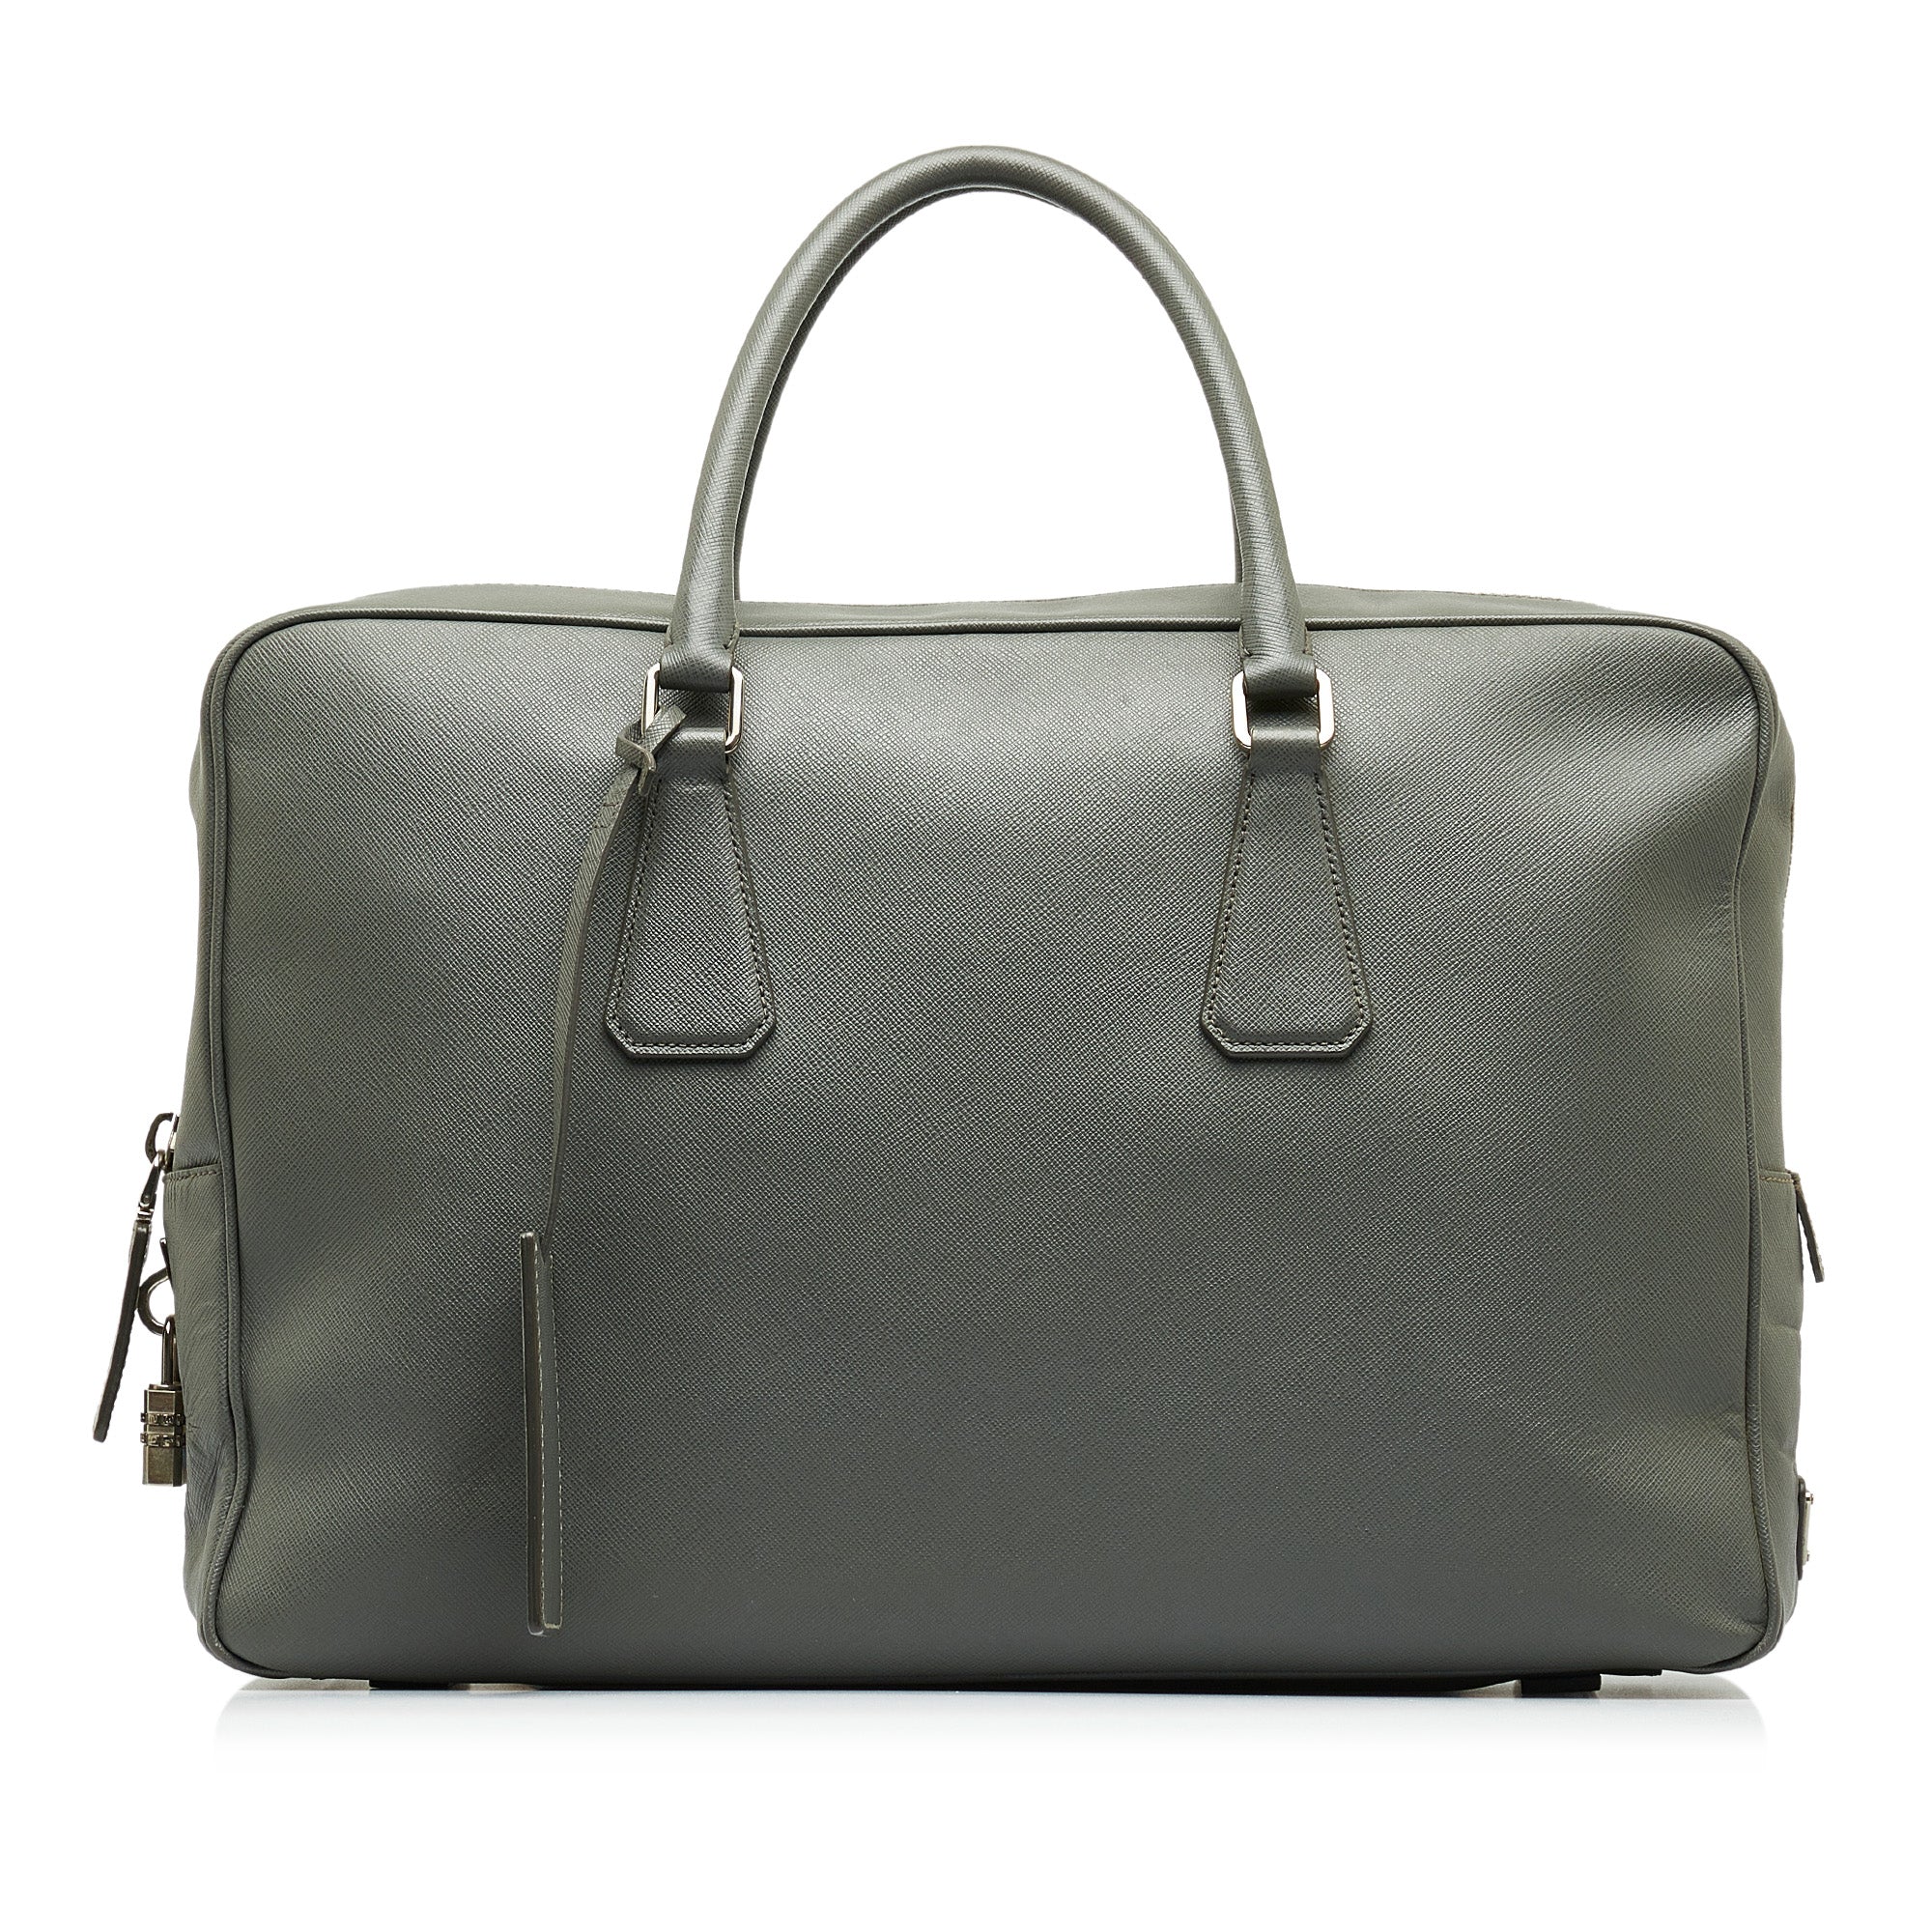 Prada Saffiano Leather Work Bag ()